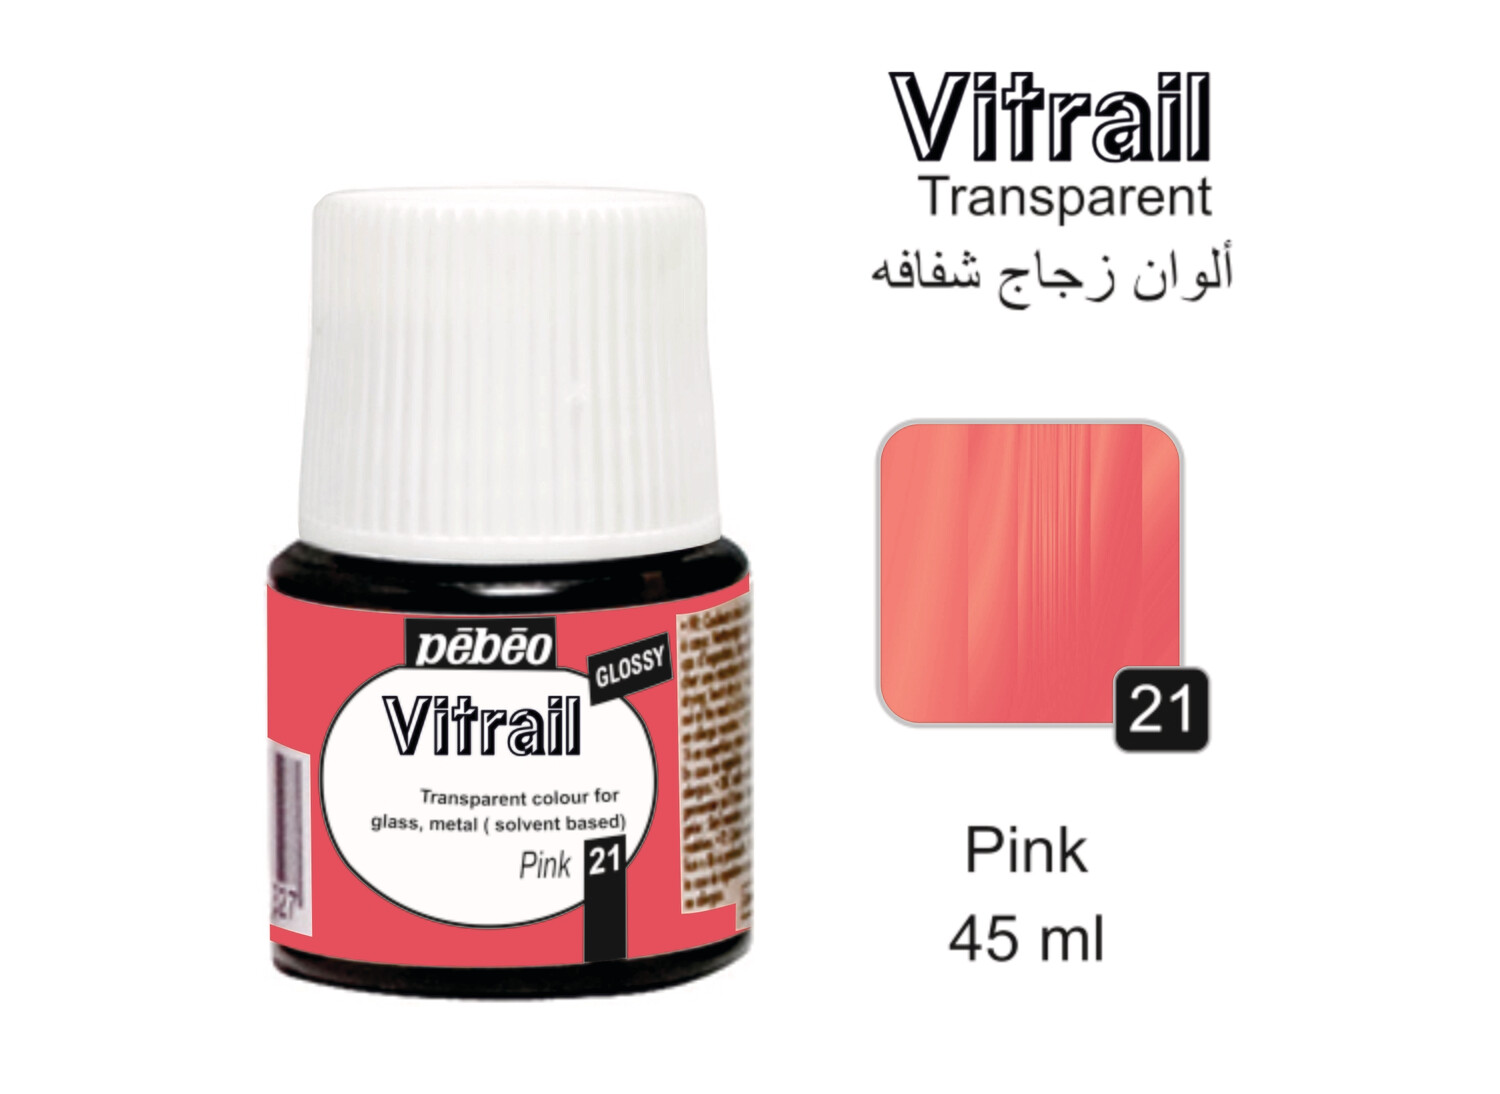 VITRAIL glass colors Pink No. 21, 45 ml